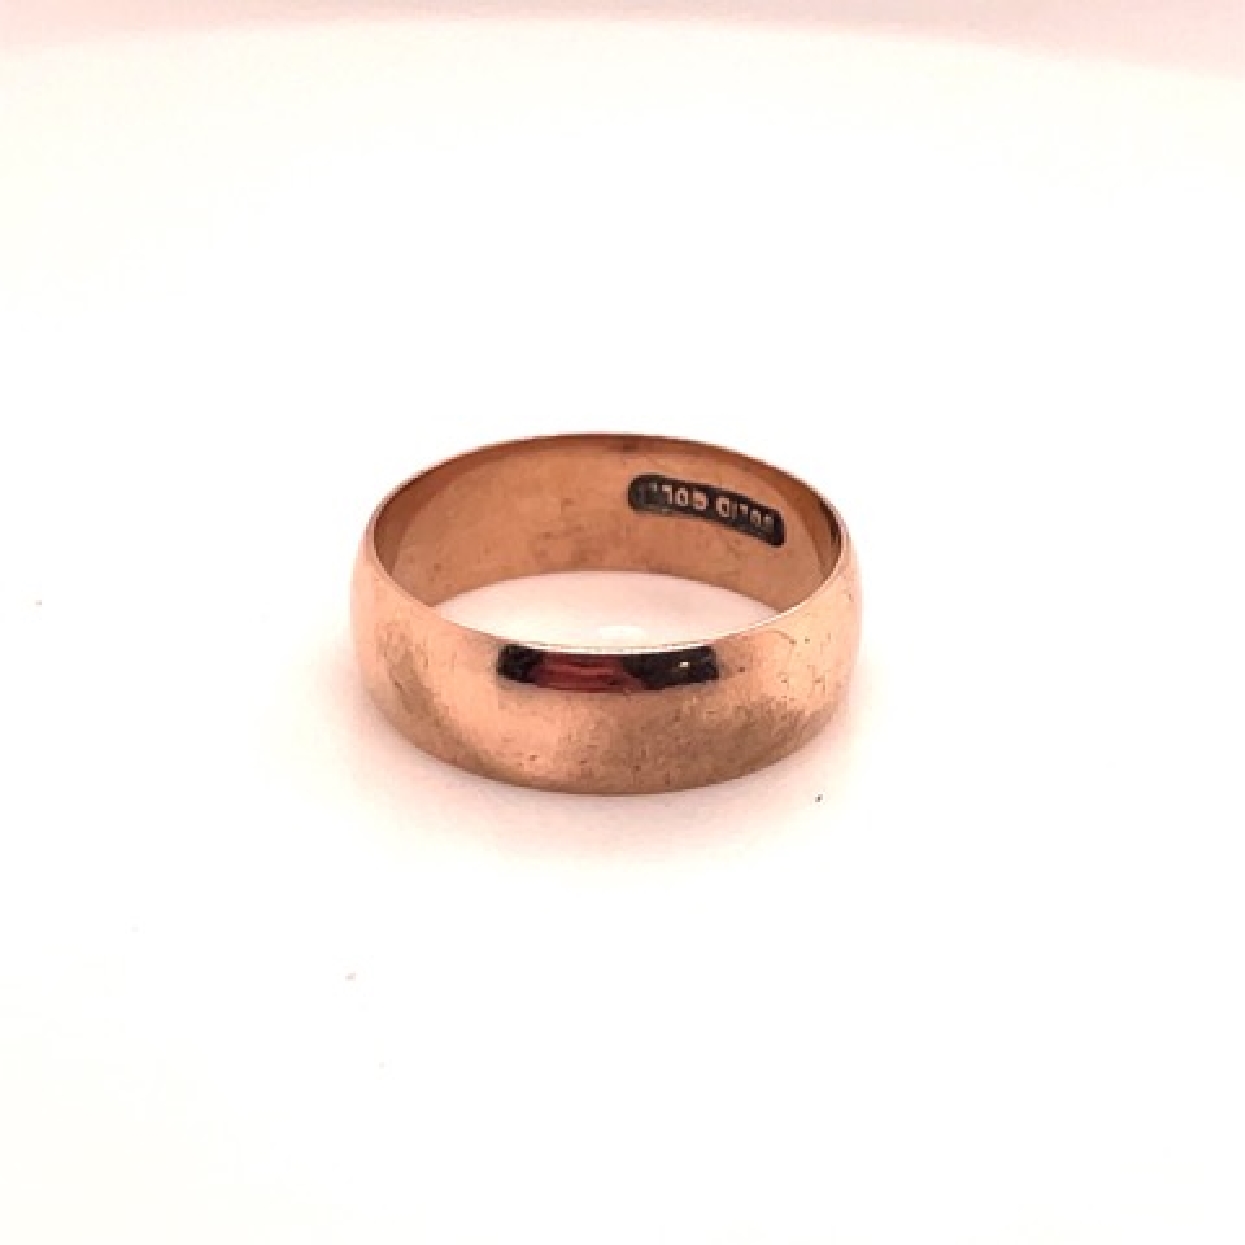 14k Rose Gold Wedding Band

Size 6.5
Width: 6mm